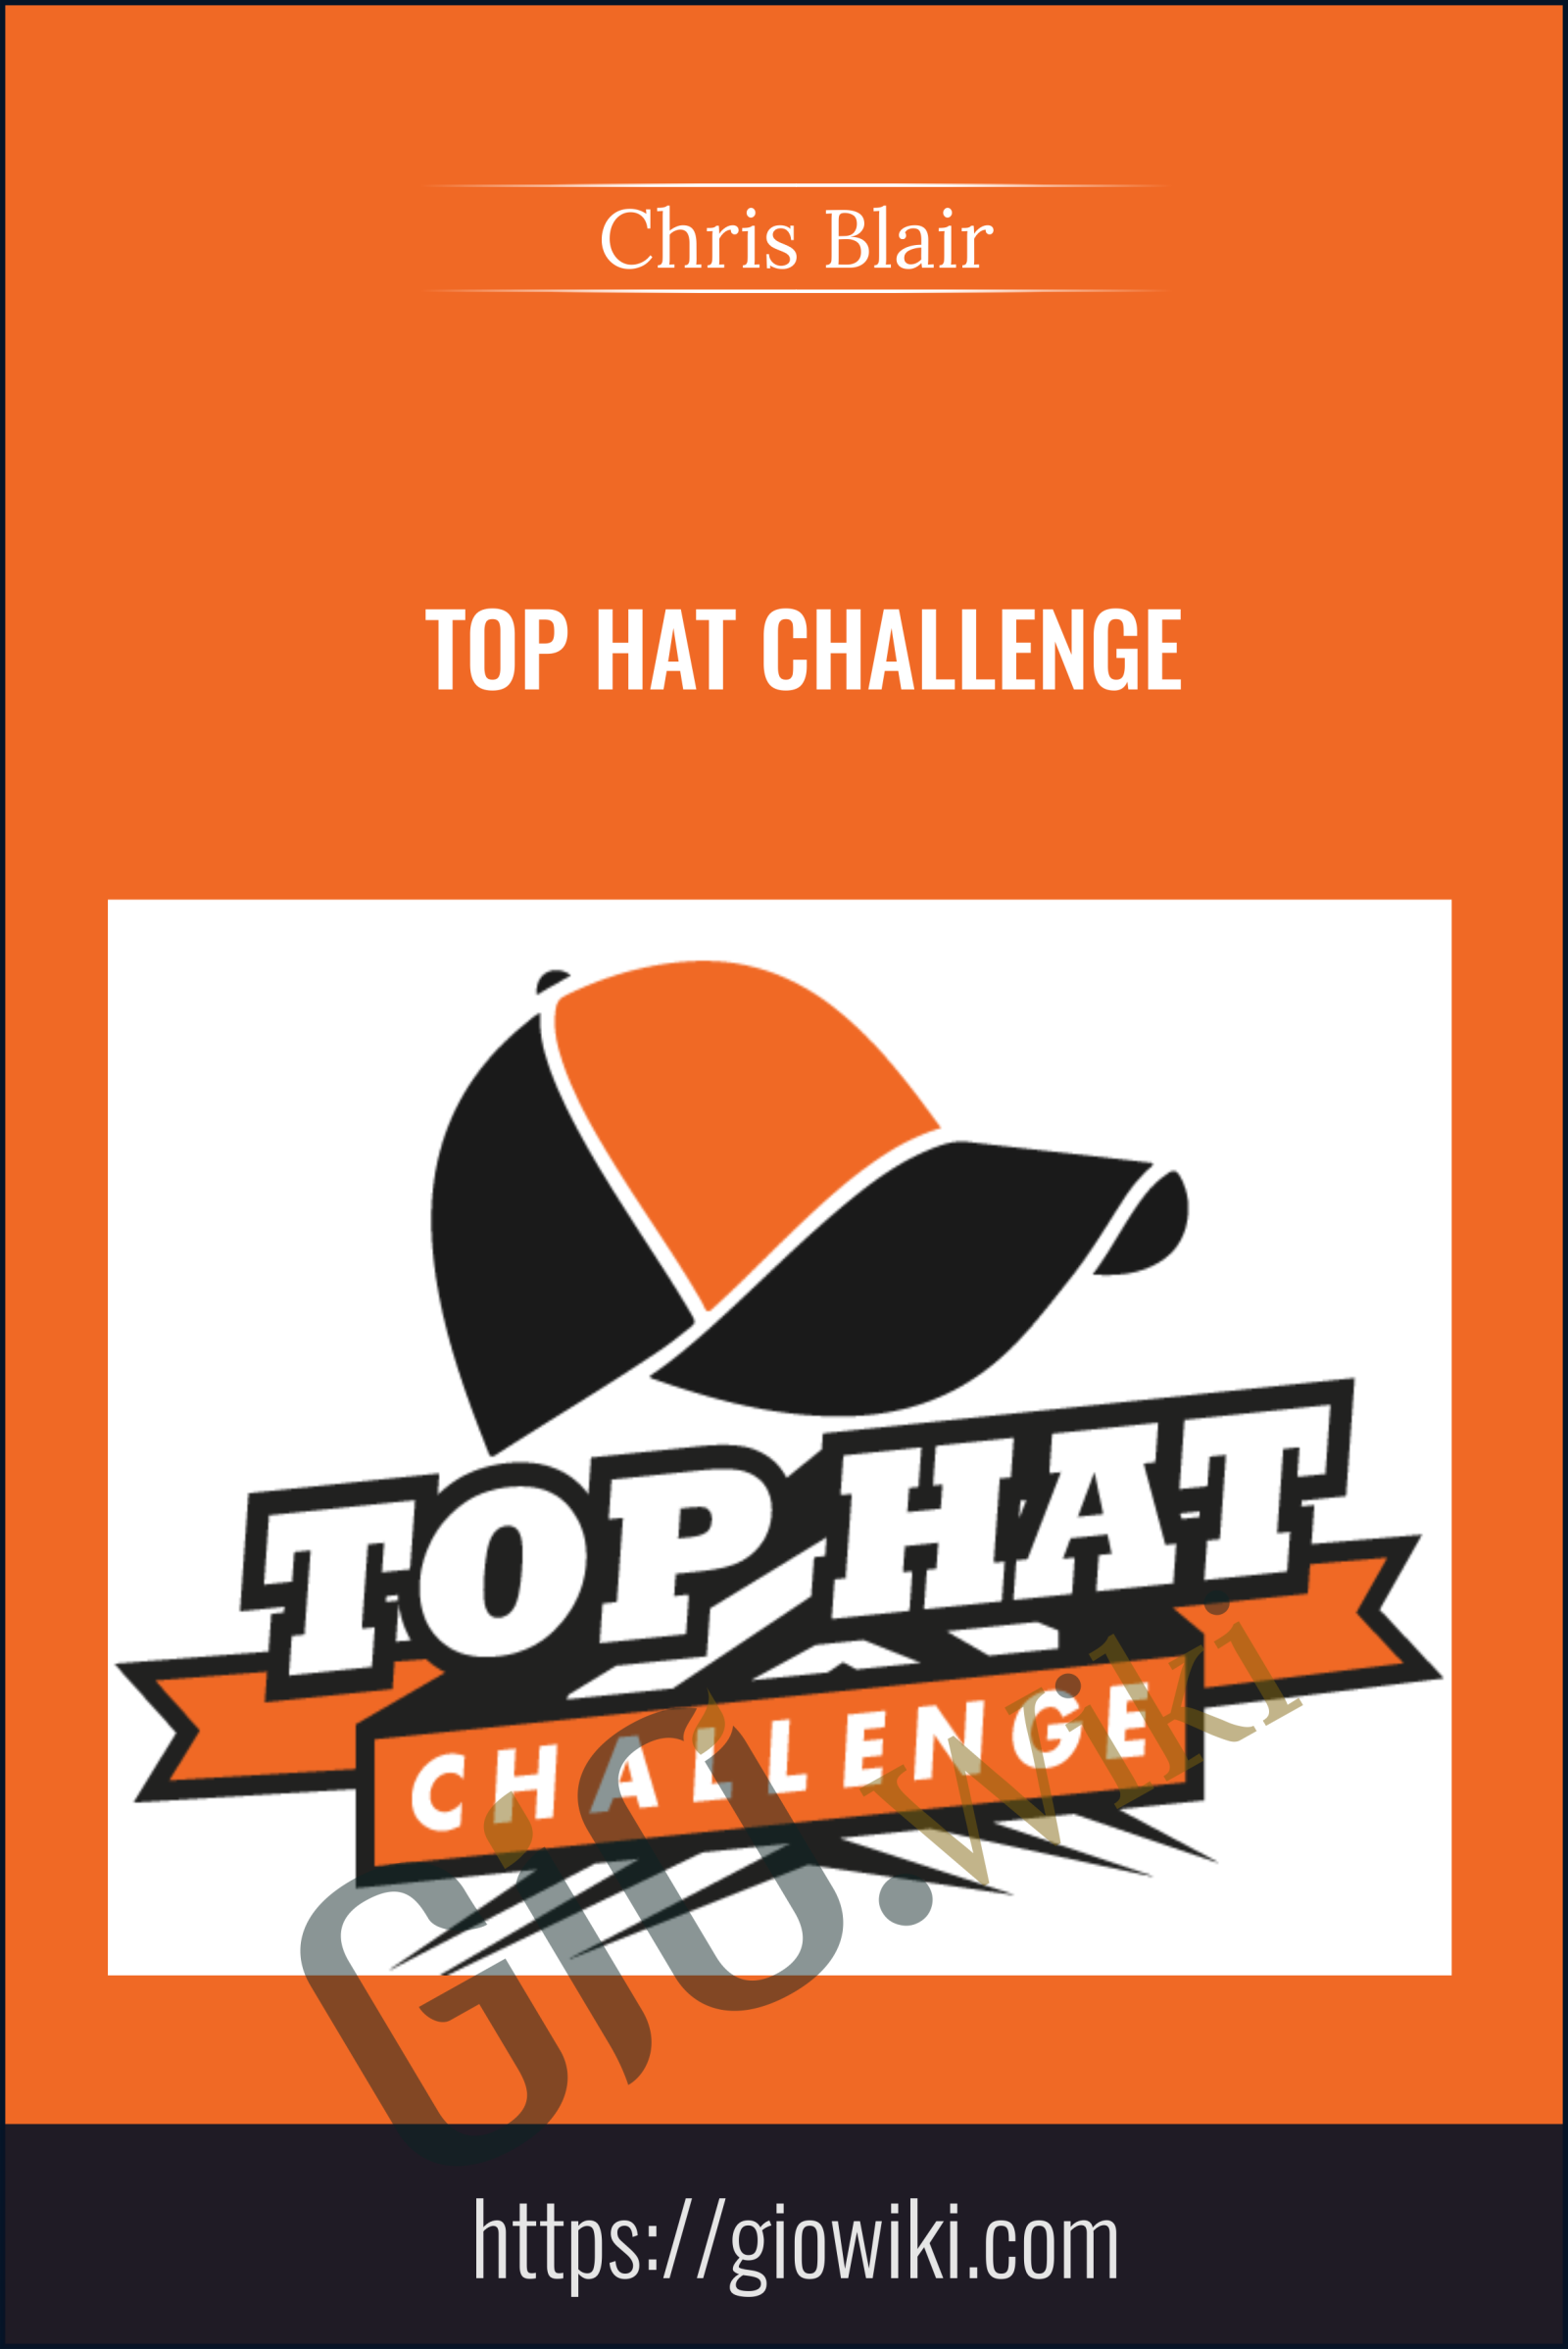 Top Hat Challenge - Chris Blair